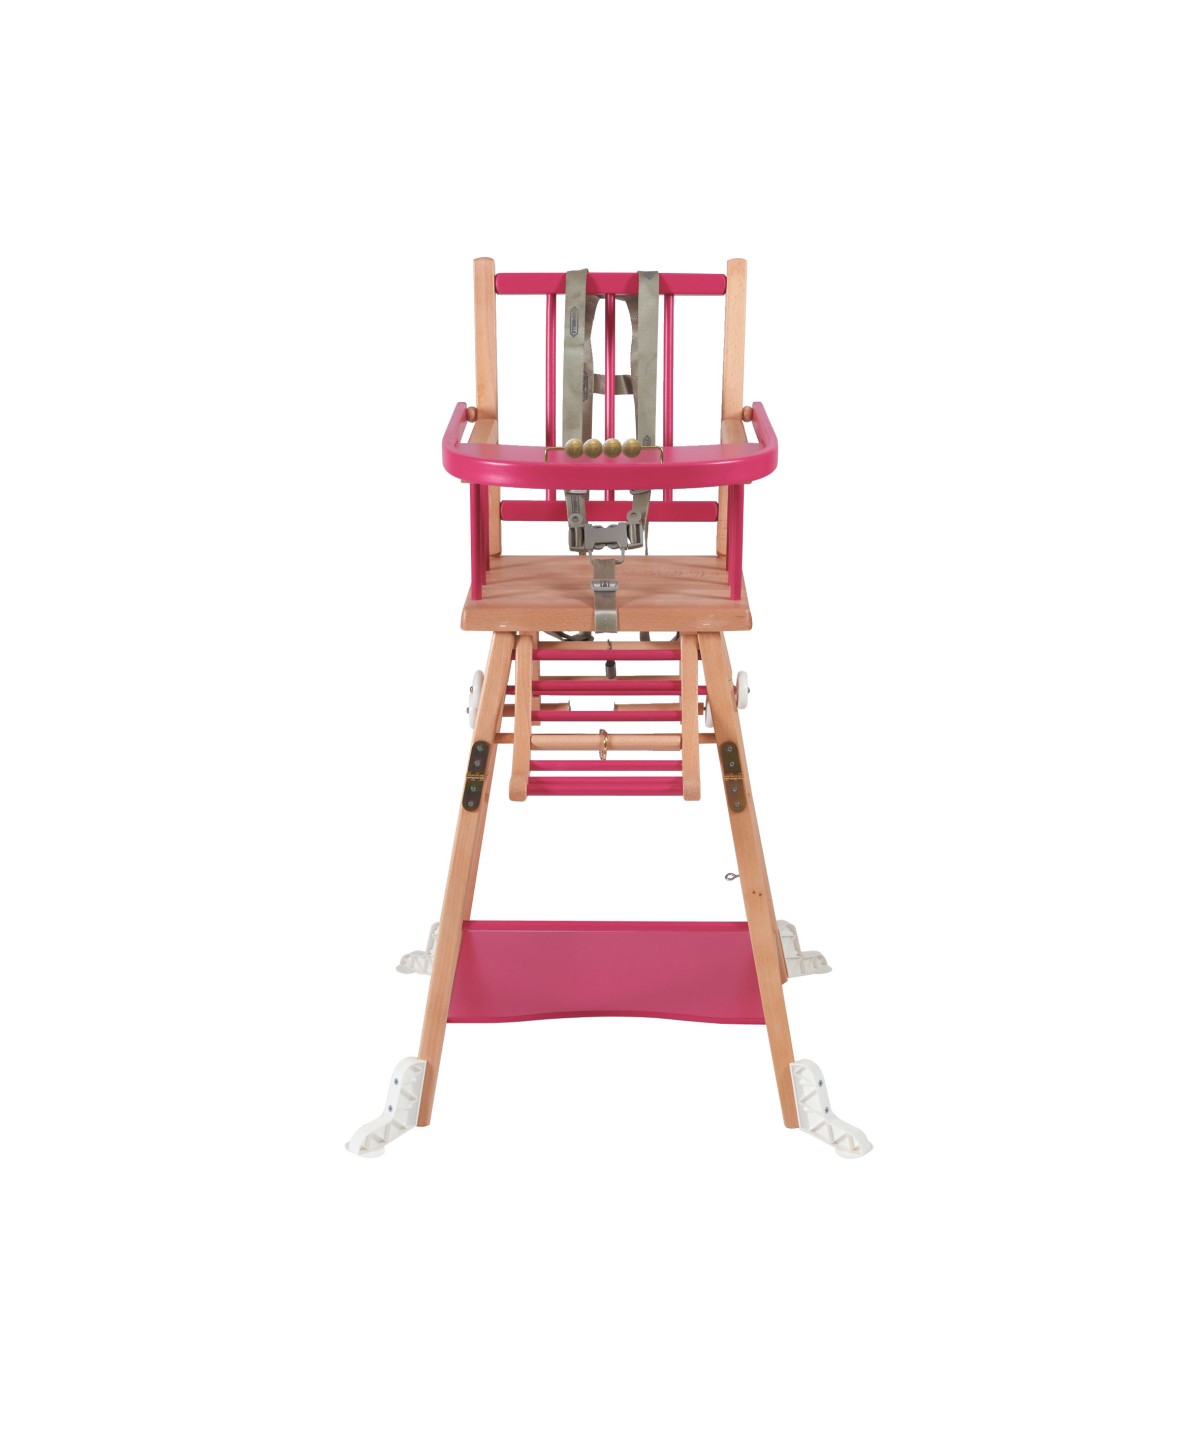 Chaise haute traditionnelle Marcel transformable – Vernis Naturel